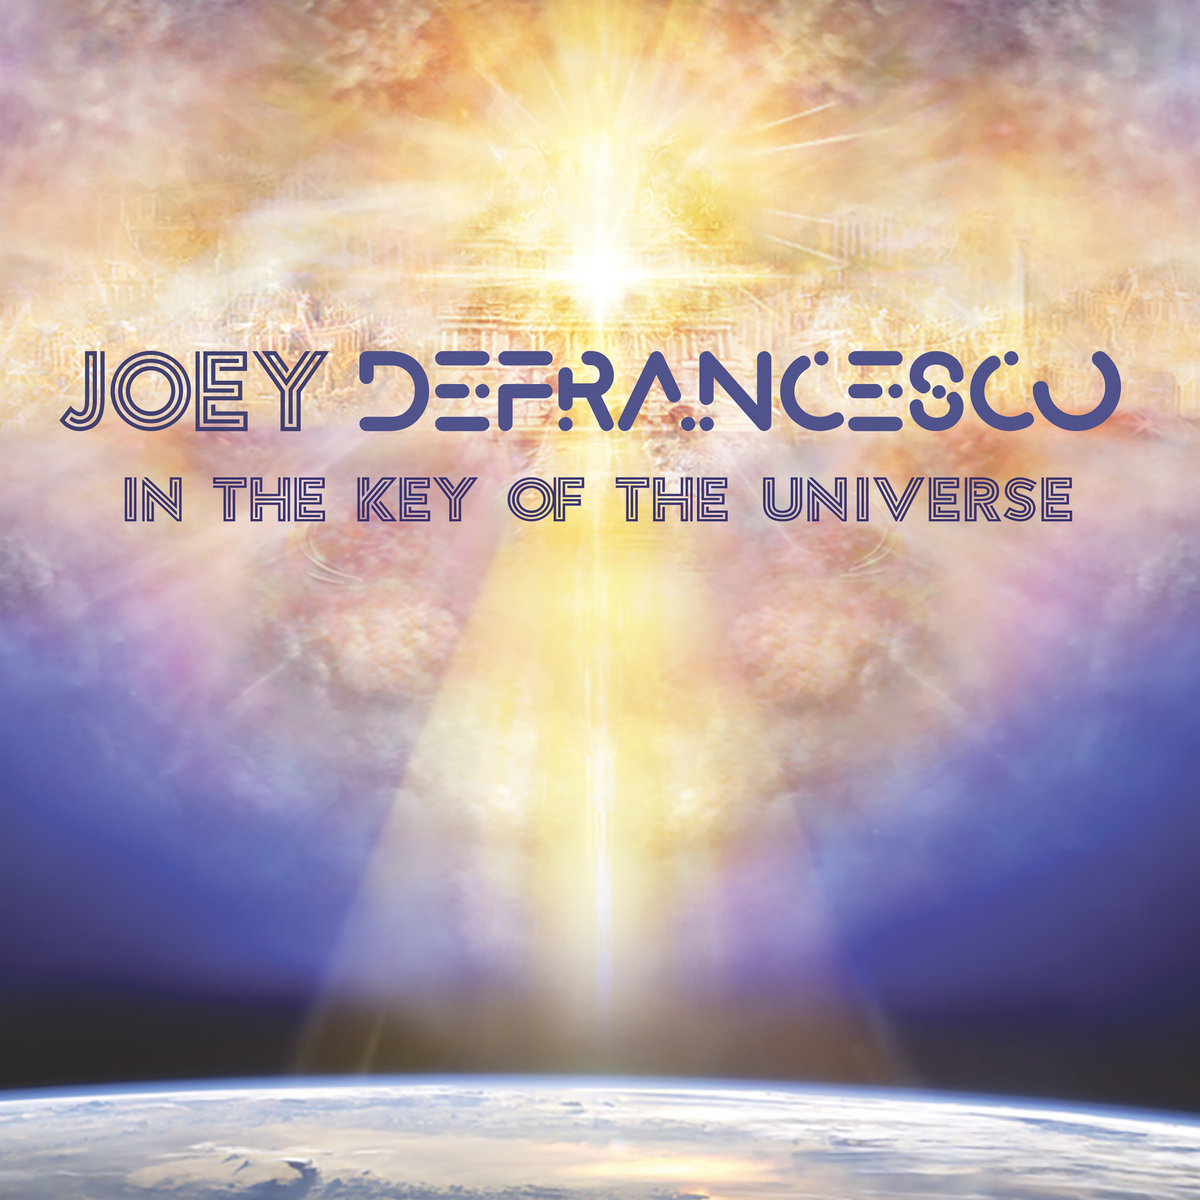 JOEY DEFRANCESCO KEY OF THE UNIVERSE